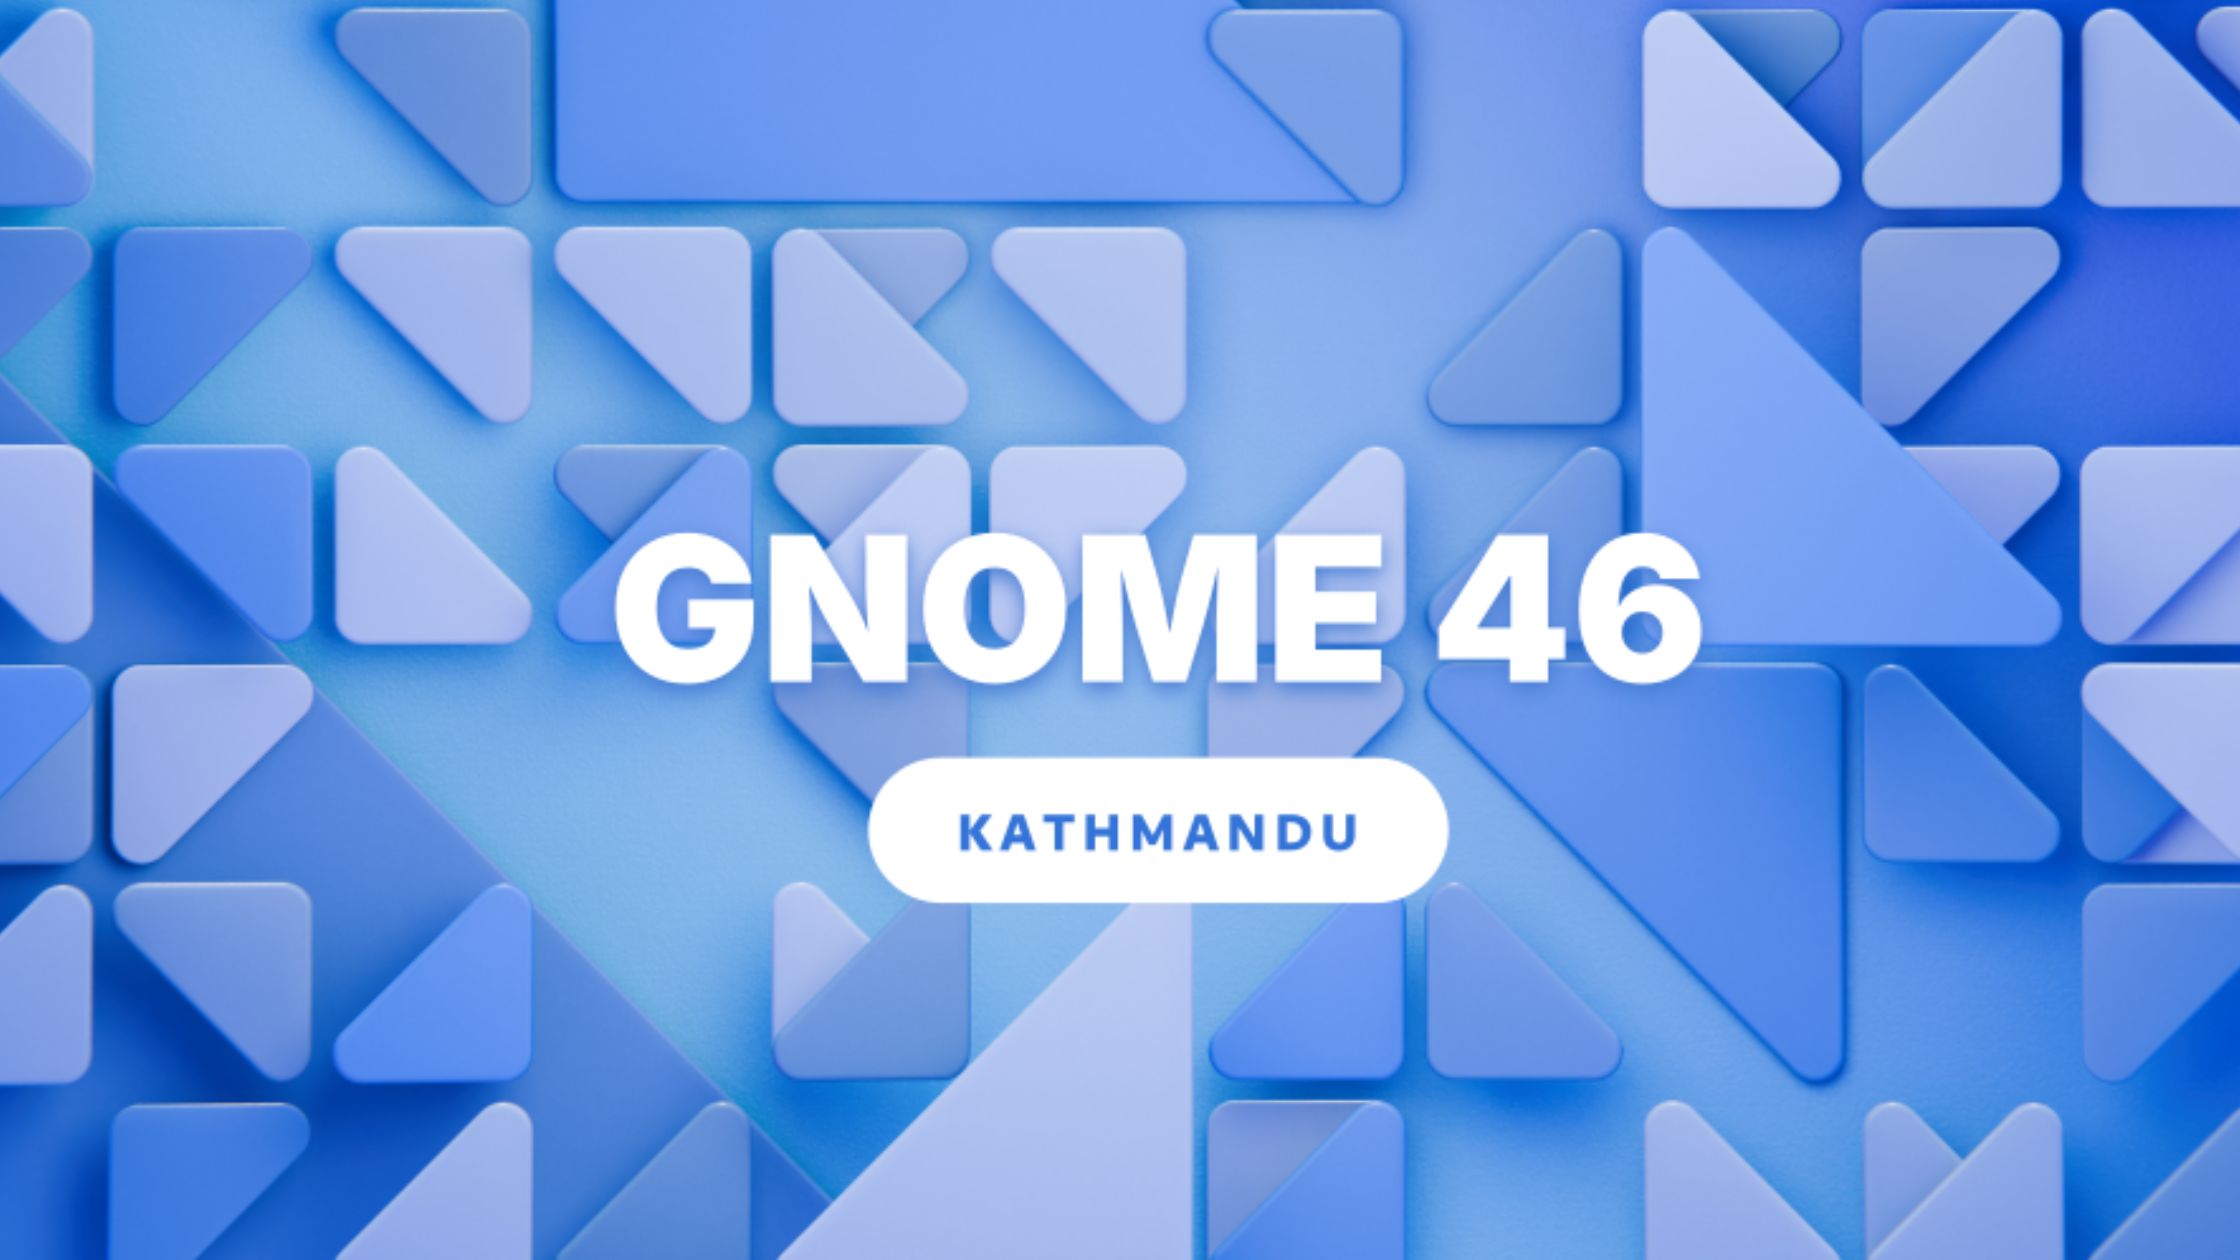 GNOME 46 “Kathmandu” Desktop Environment Released